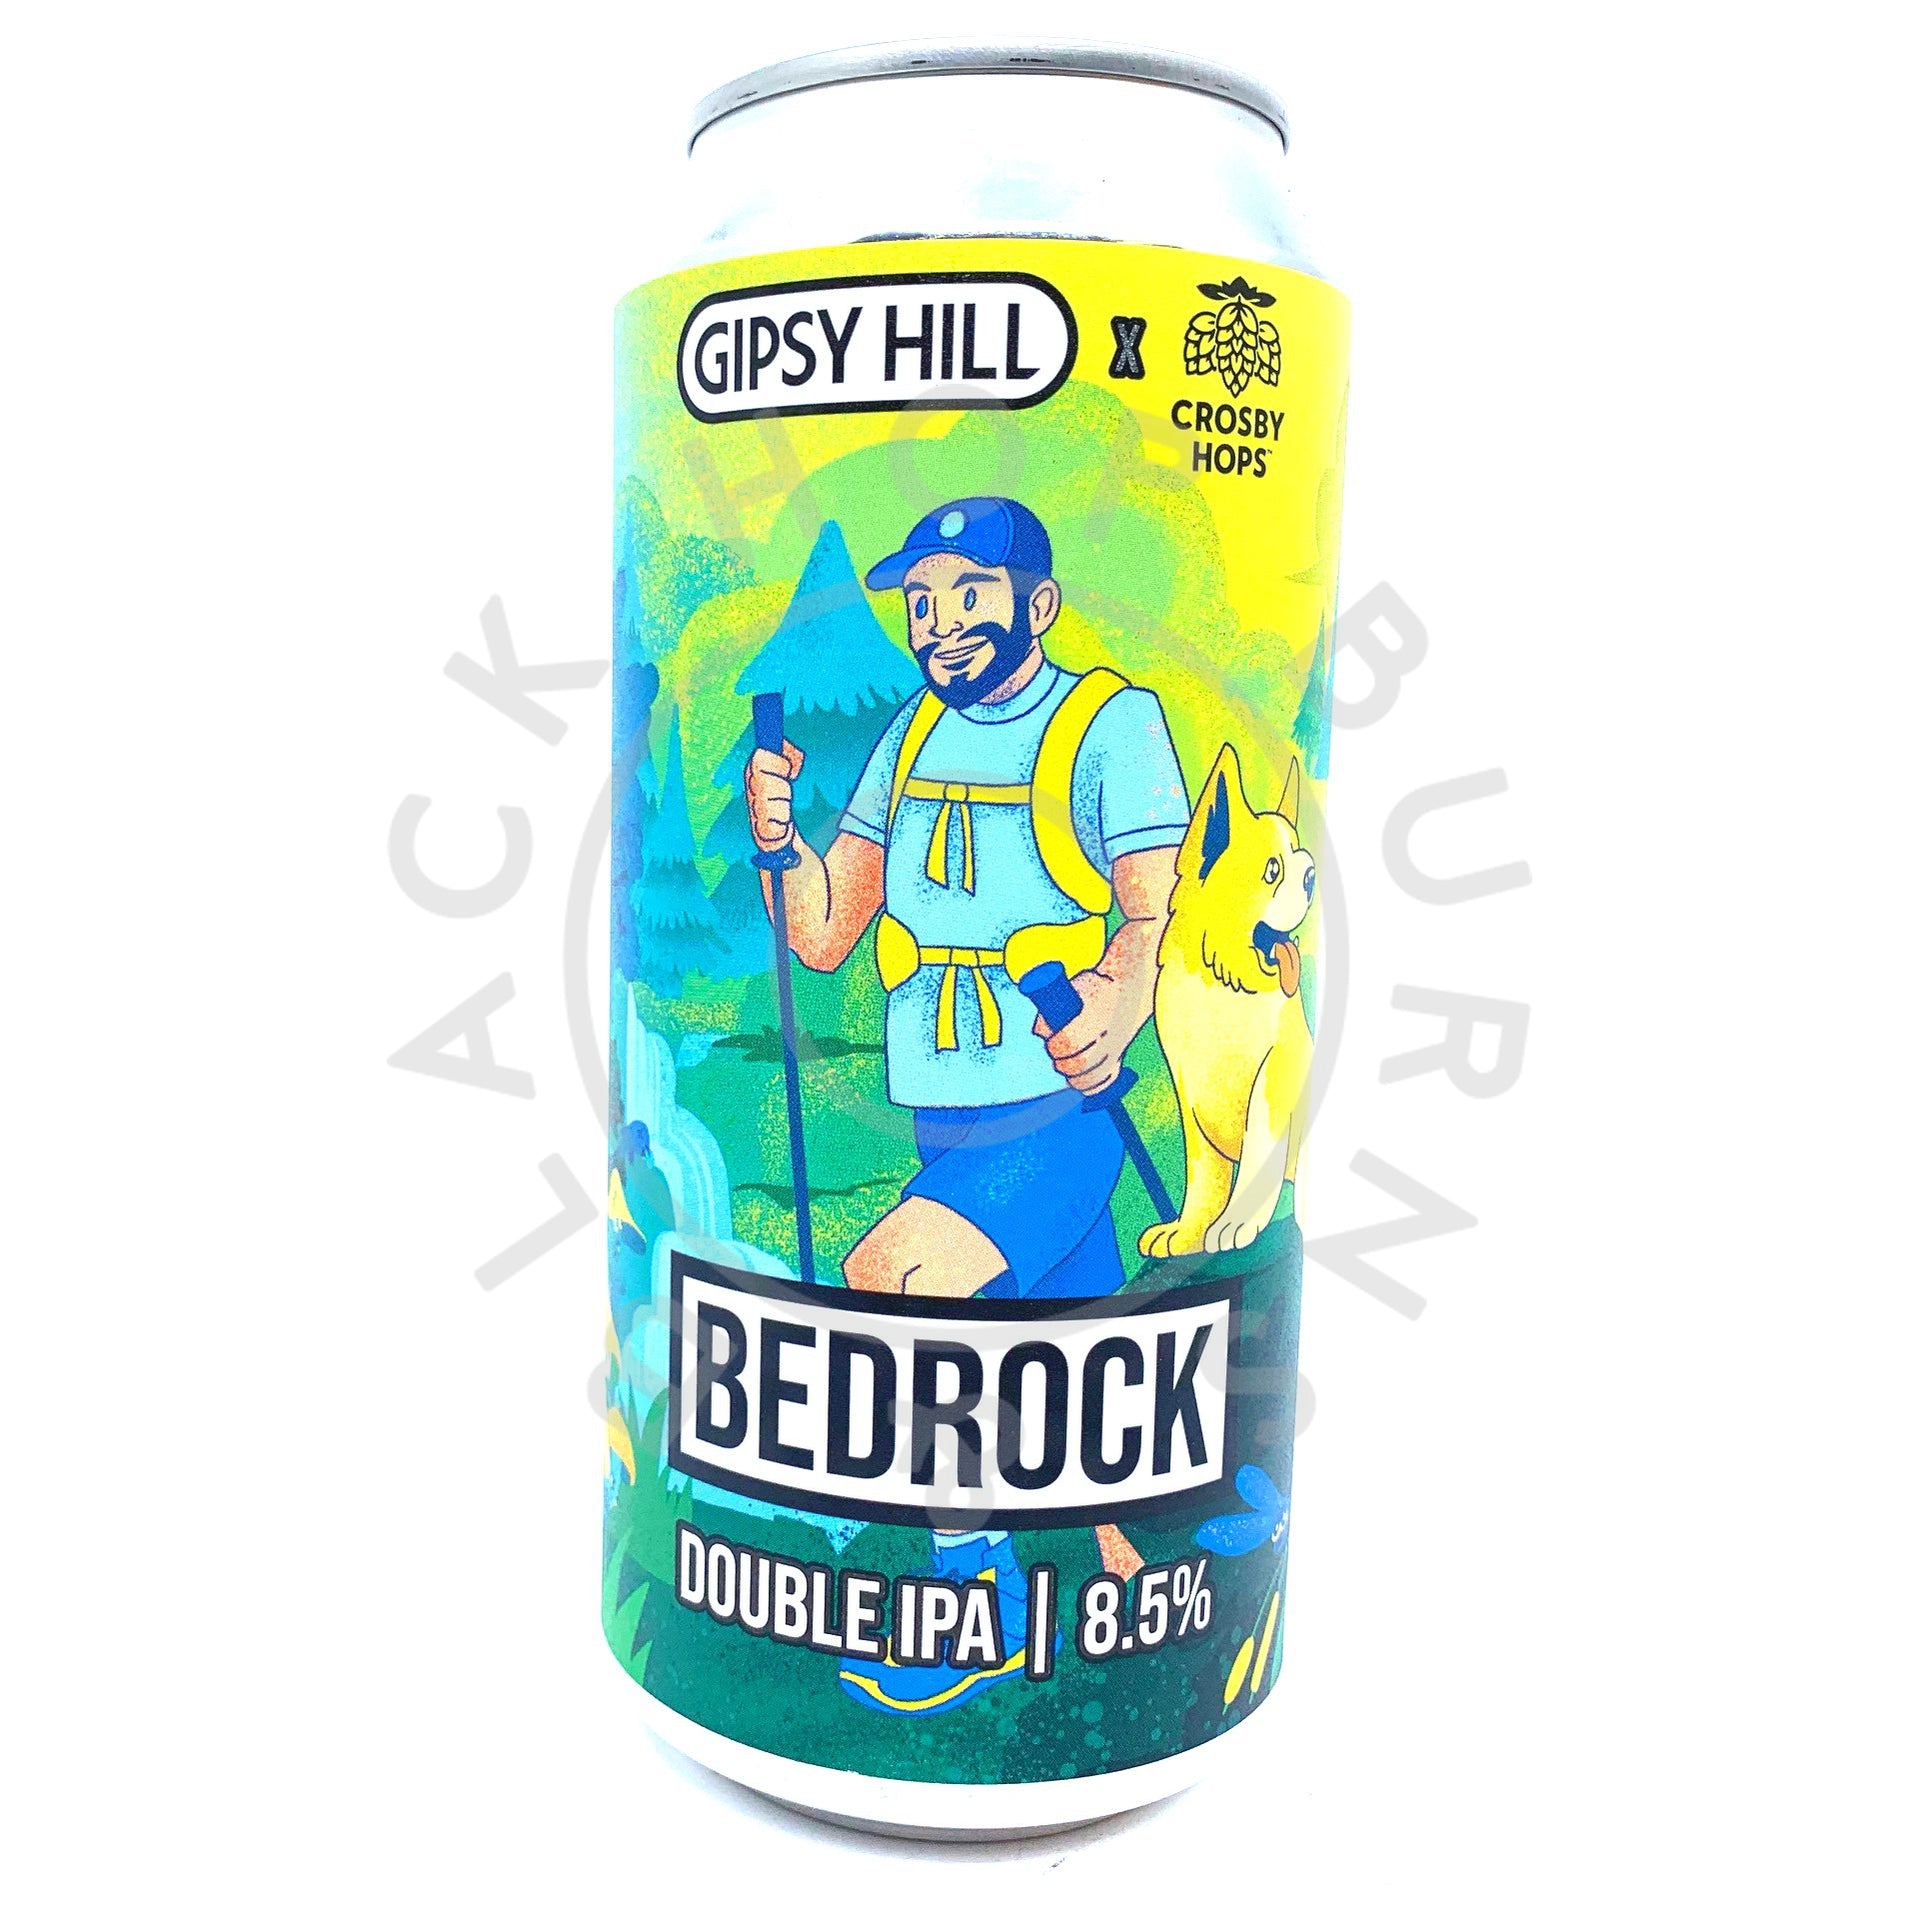 Gipsy Hill Bedrock Double IPA 8.5% (440ml can)-Hop Burns & Black